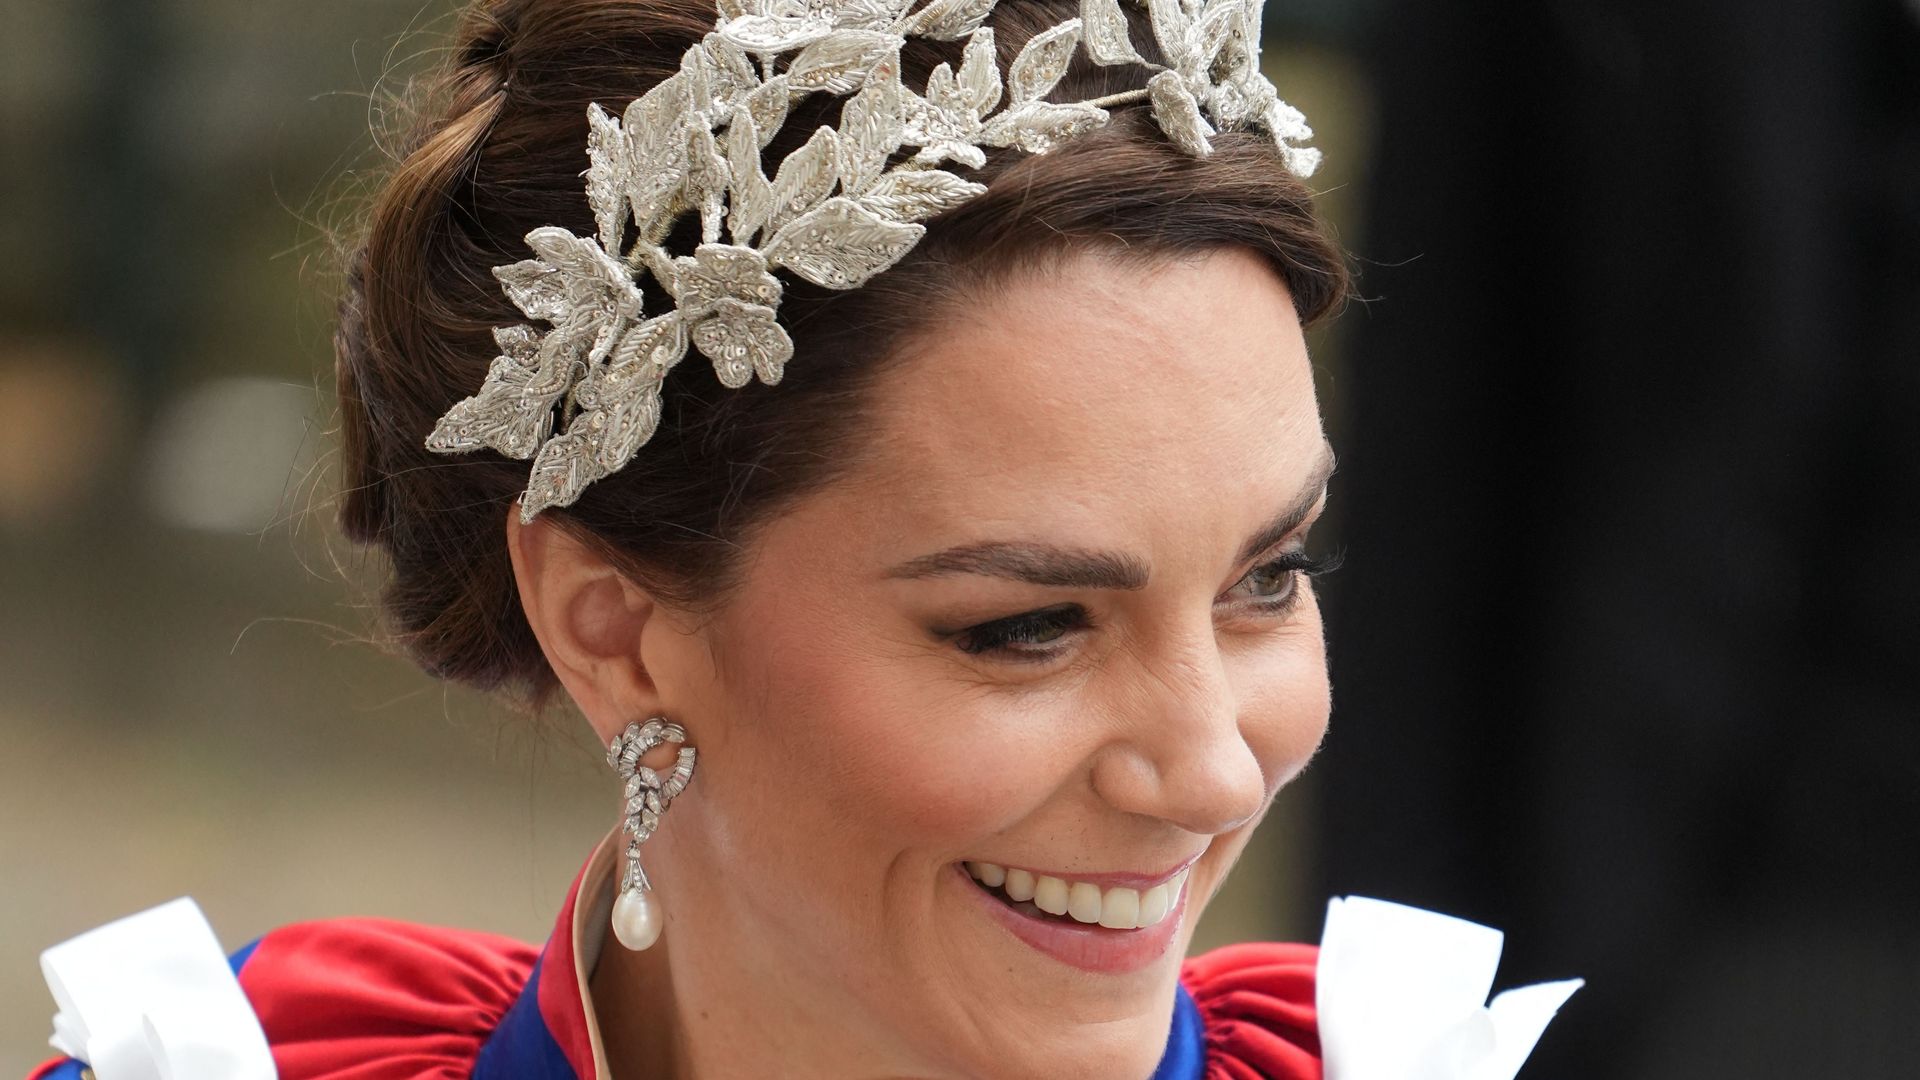 Princess of Wales headpiece